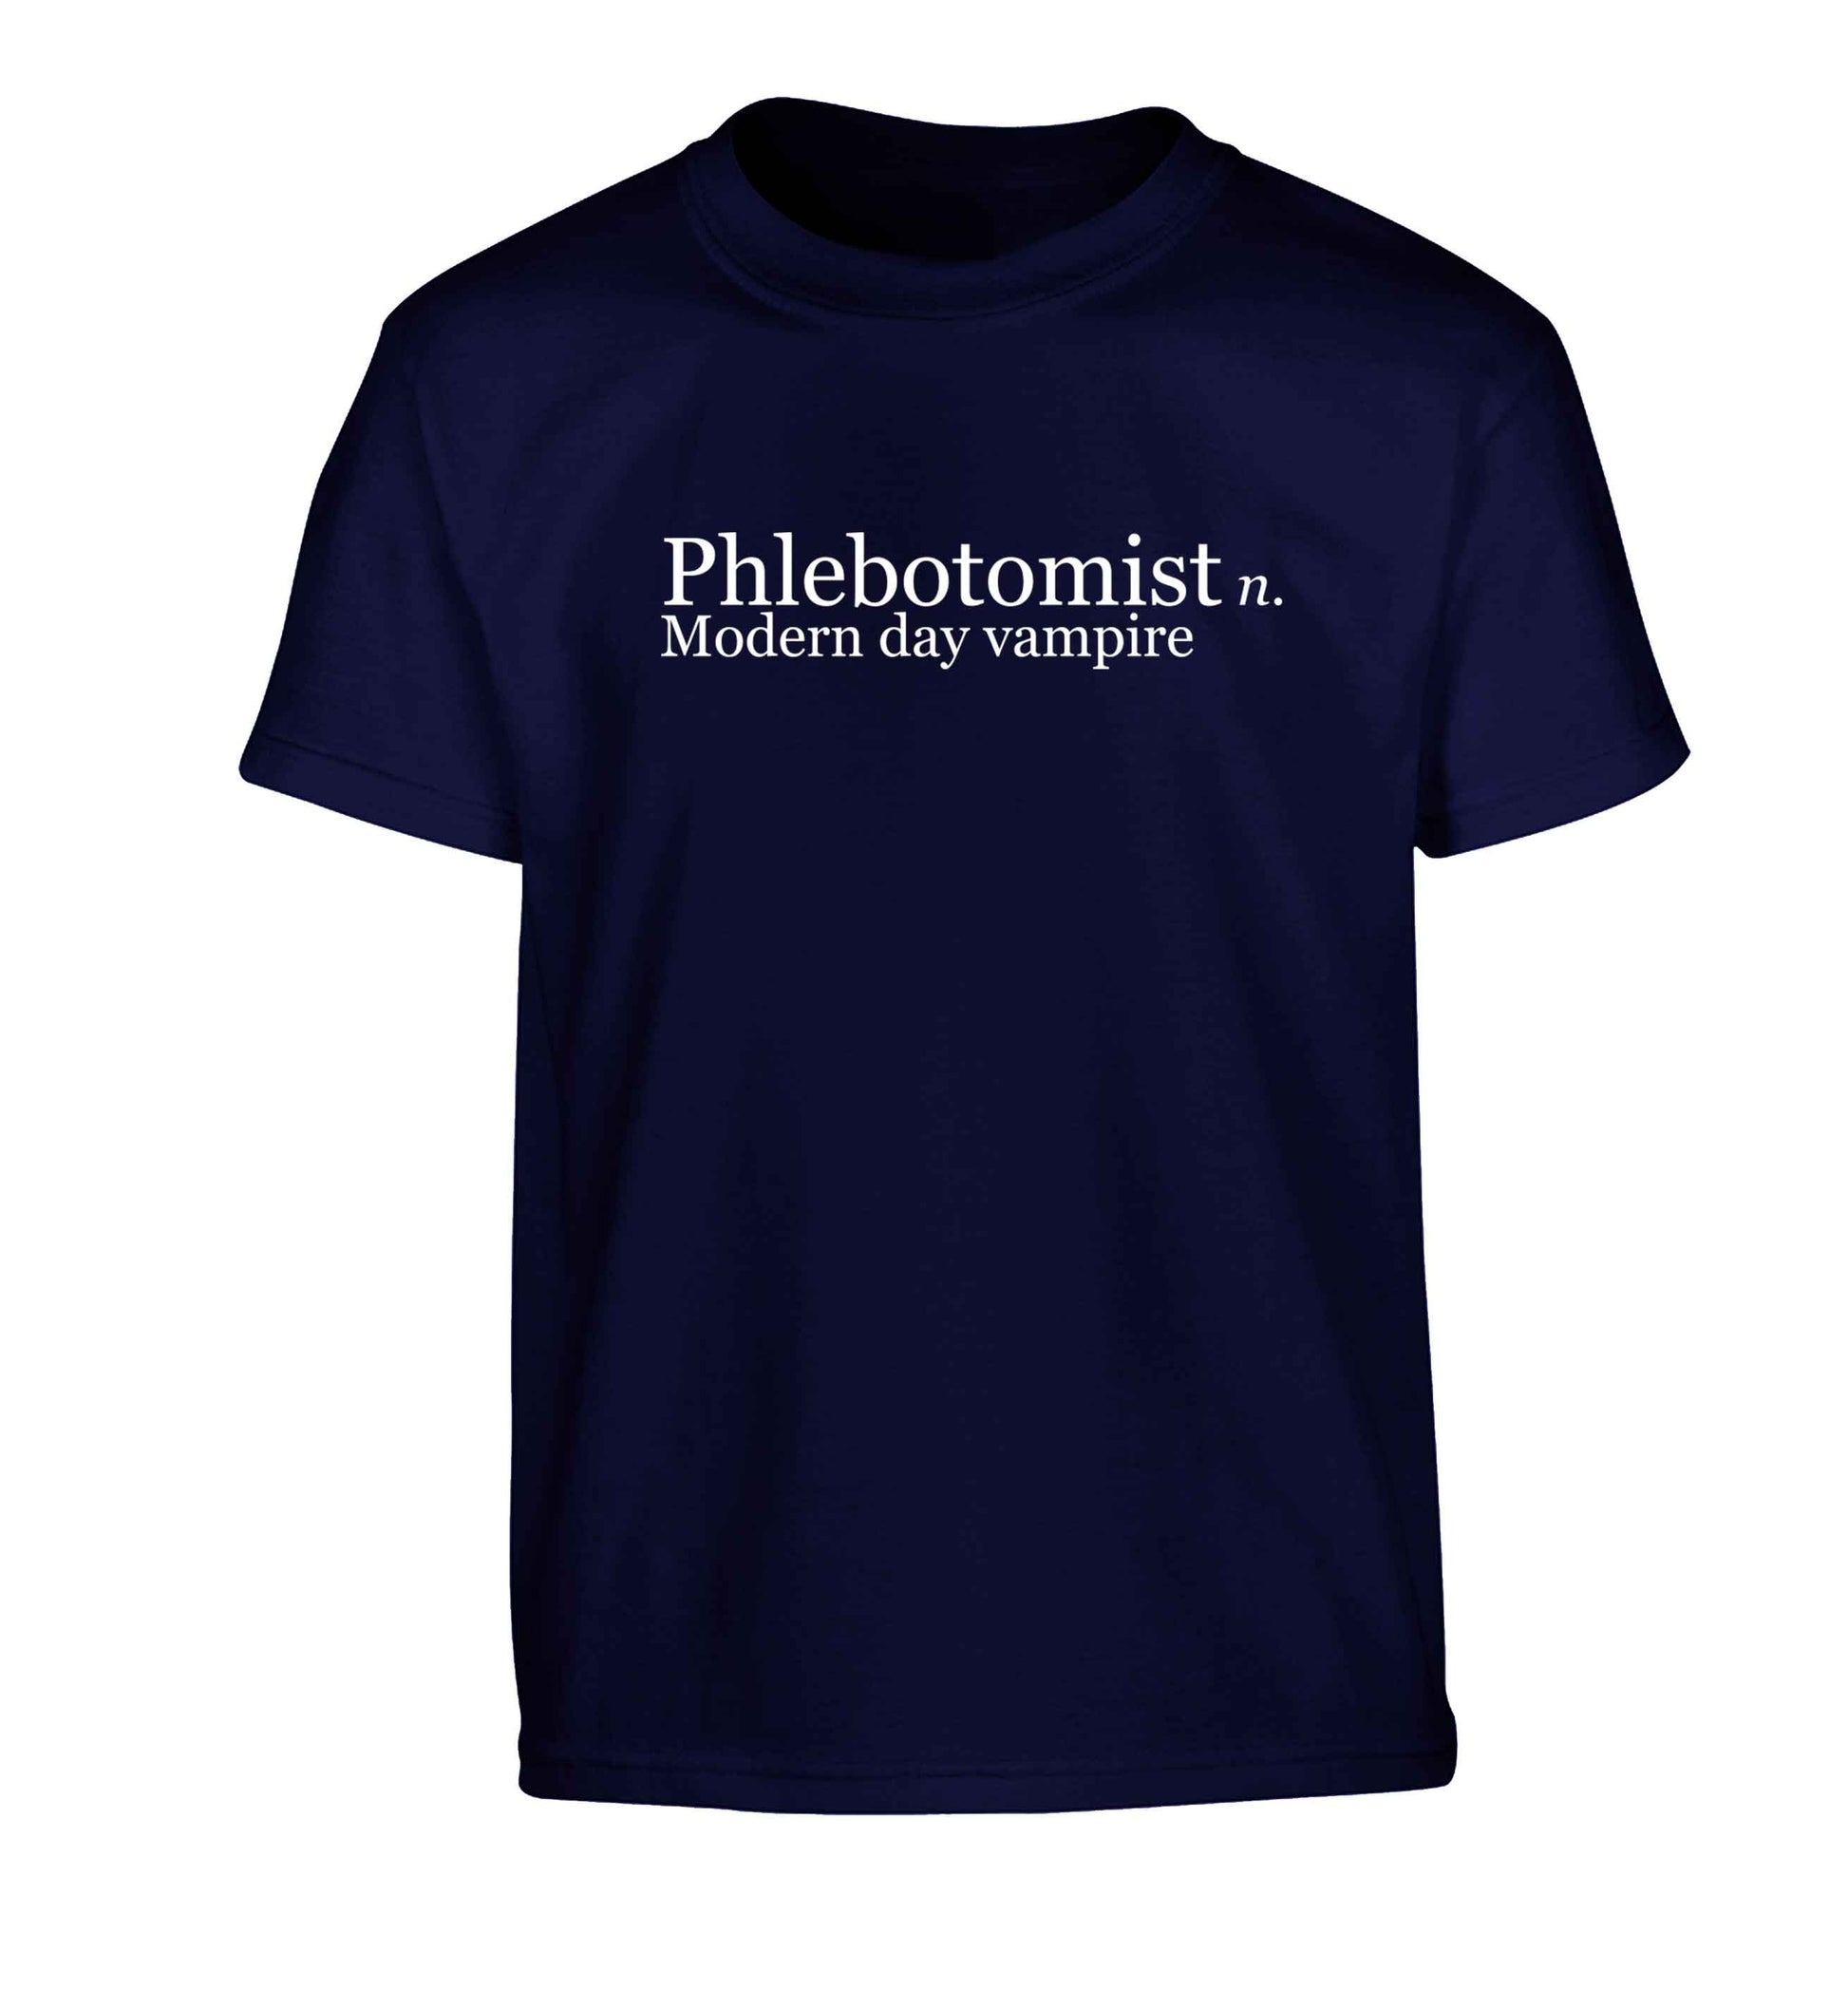 Phlebotomist - Modern day vampire Children's navy Tshirt 12-13 Years